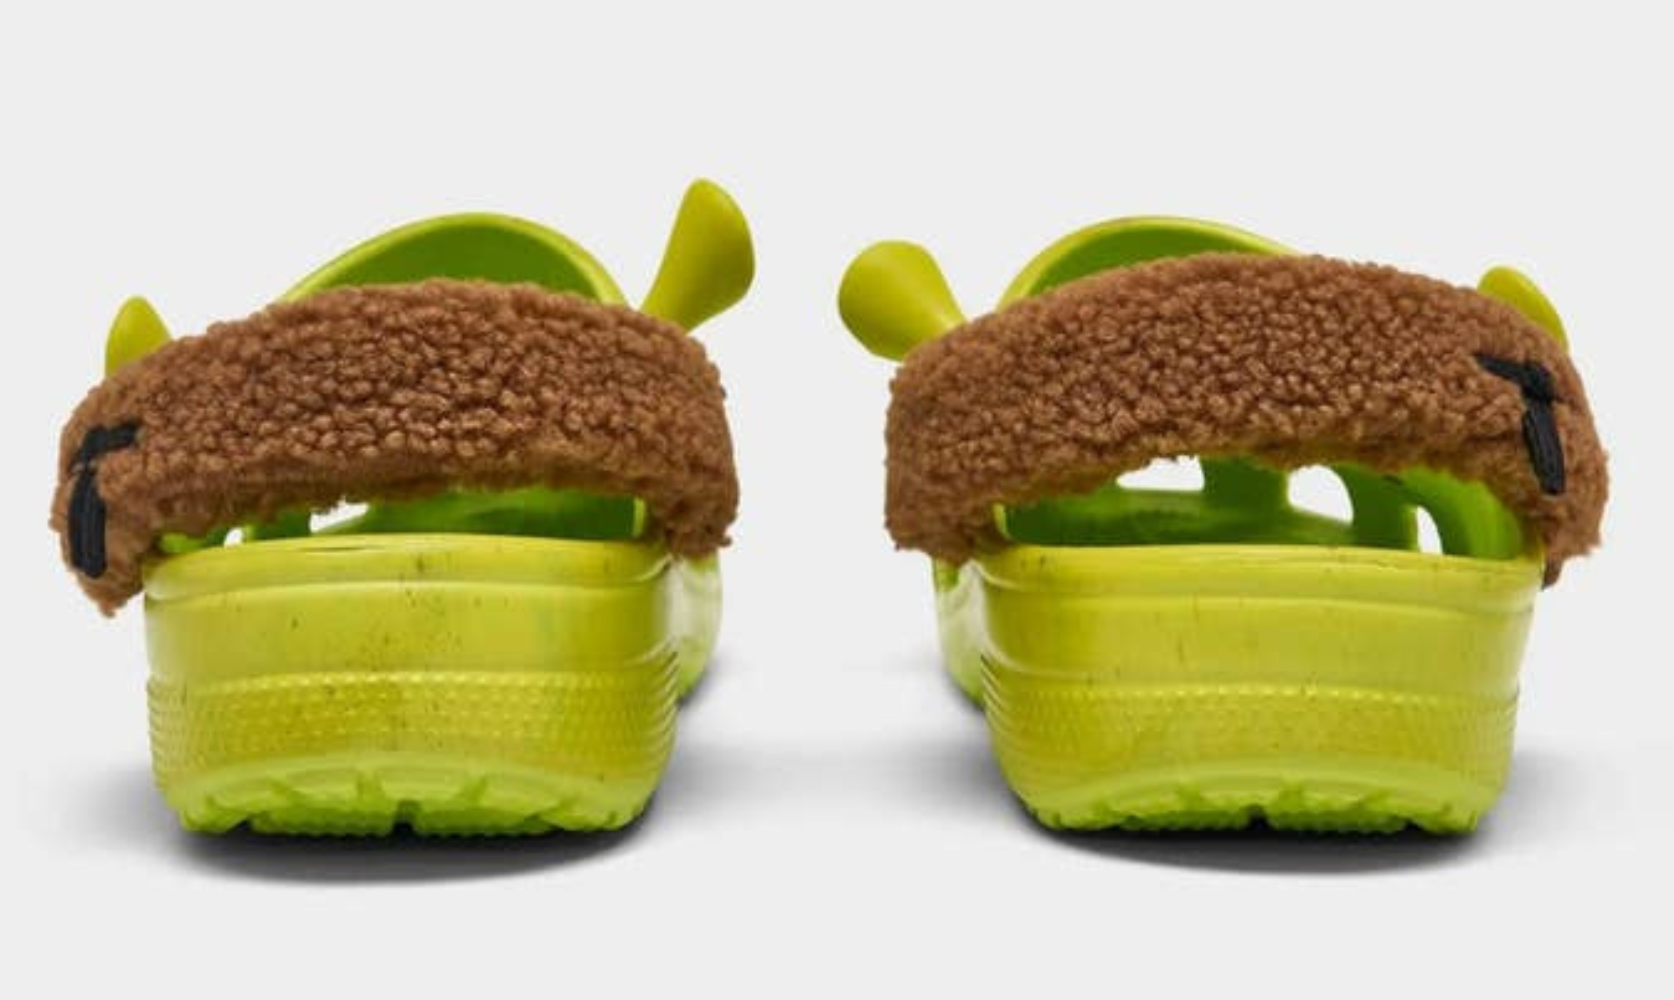 Crocs edición limitada inspirados en Shrek